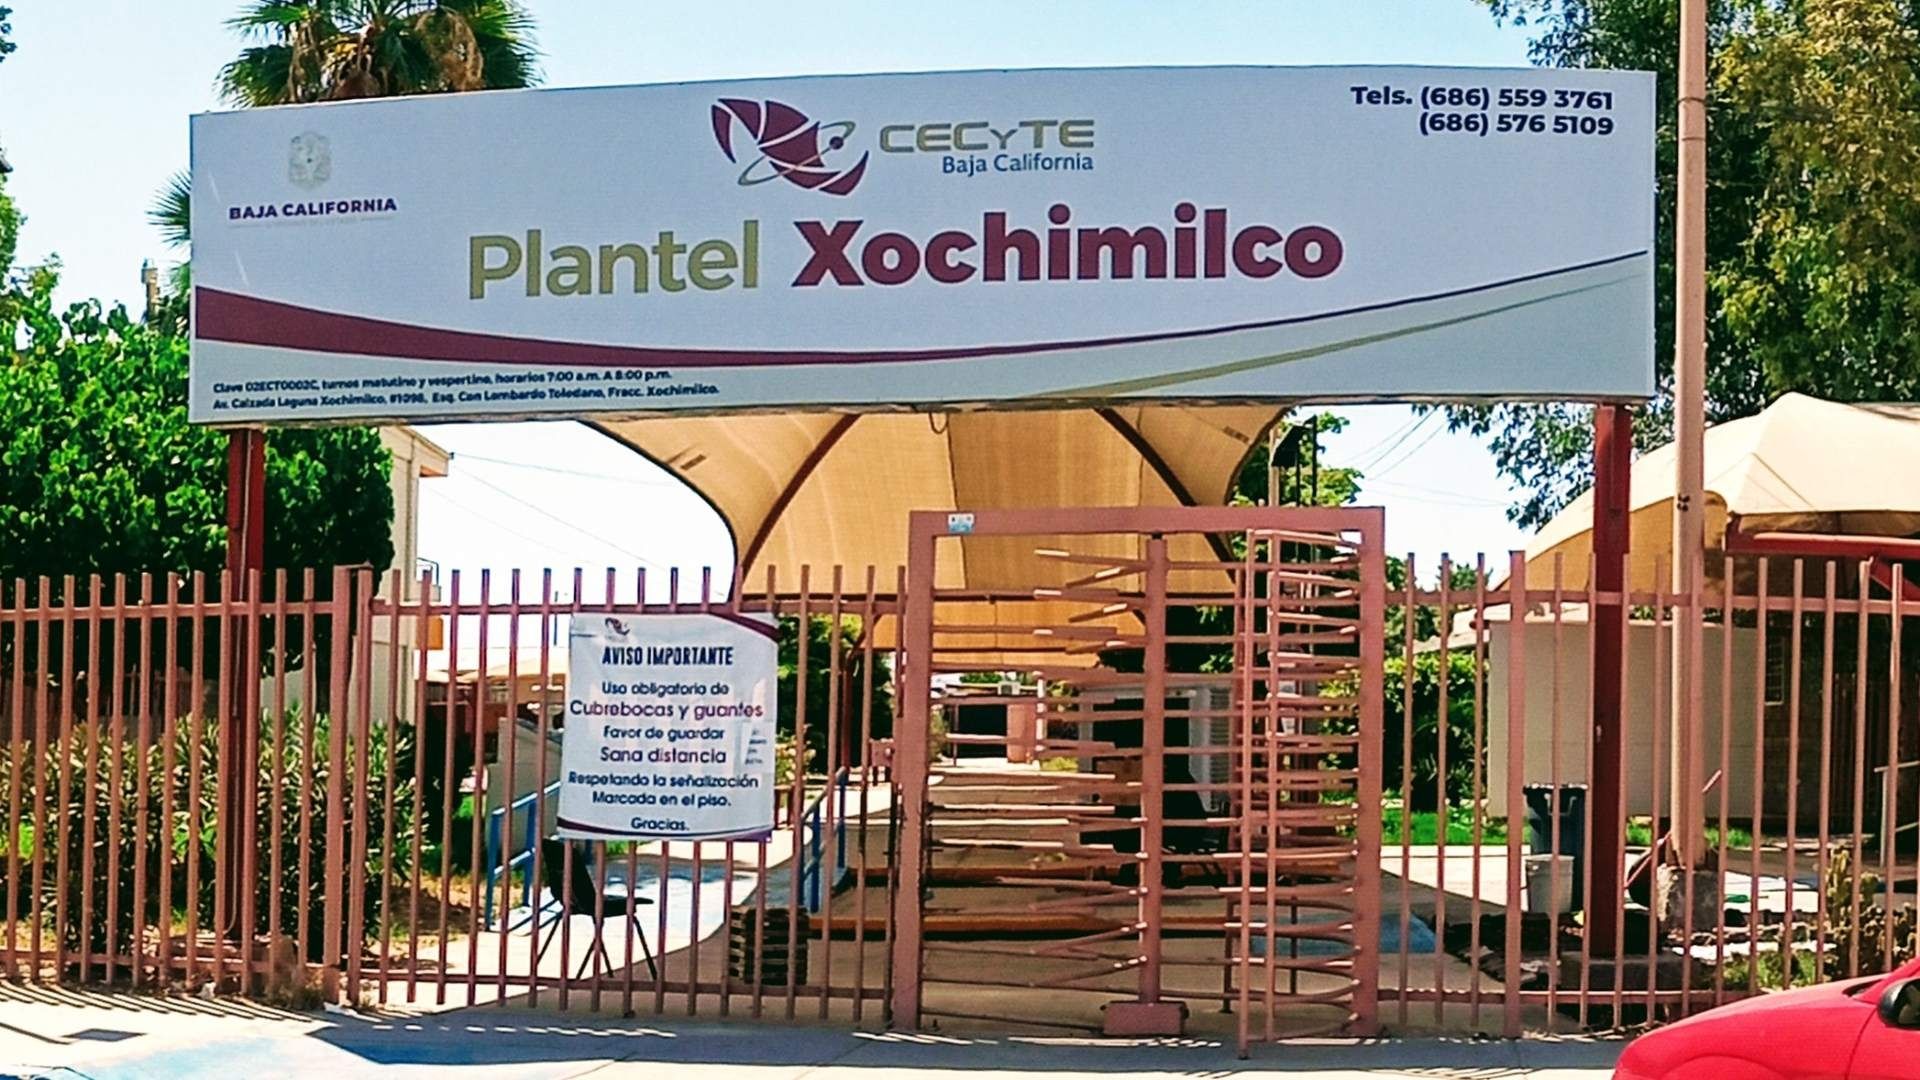 Encuentran Feto en Baño de Cecyte Xochimilco en Mexicali